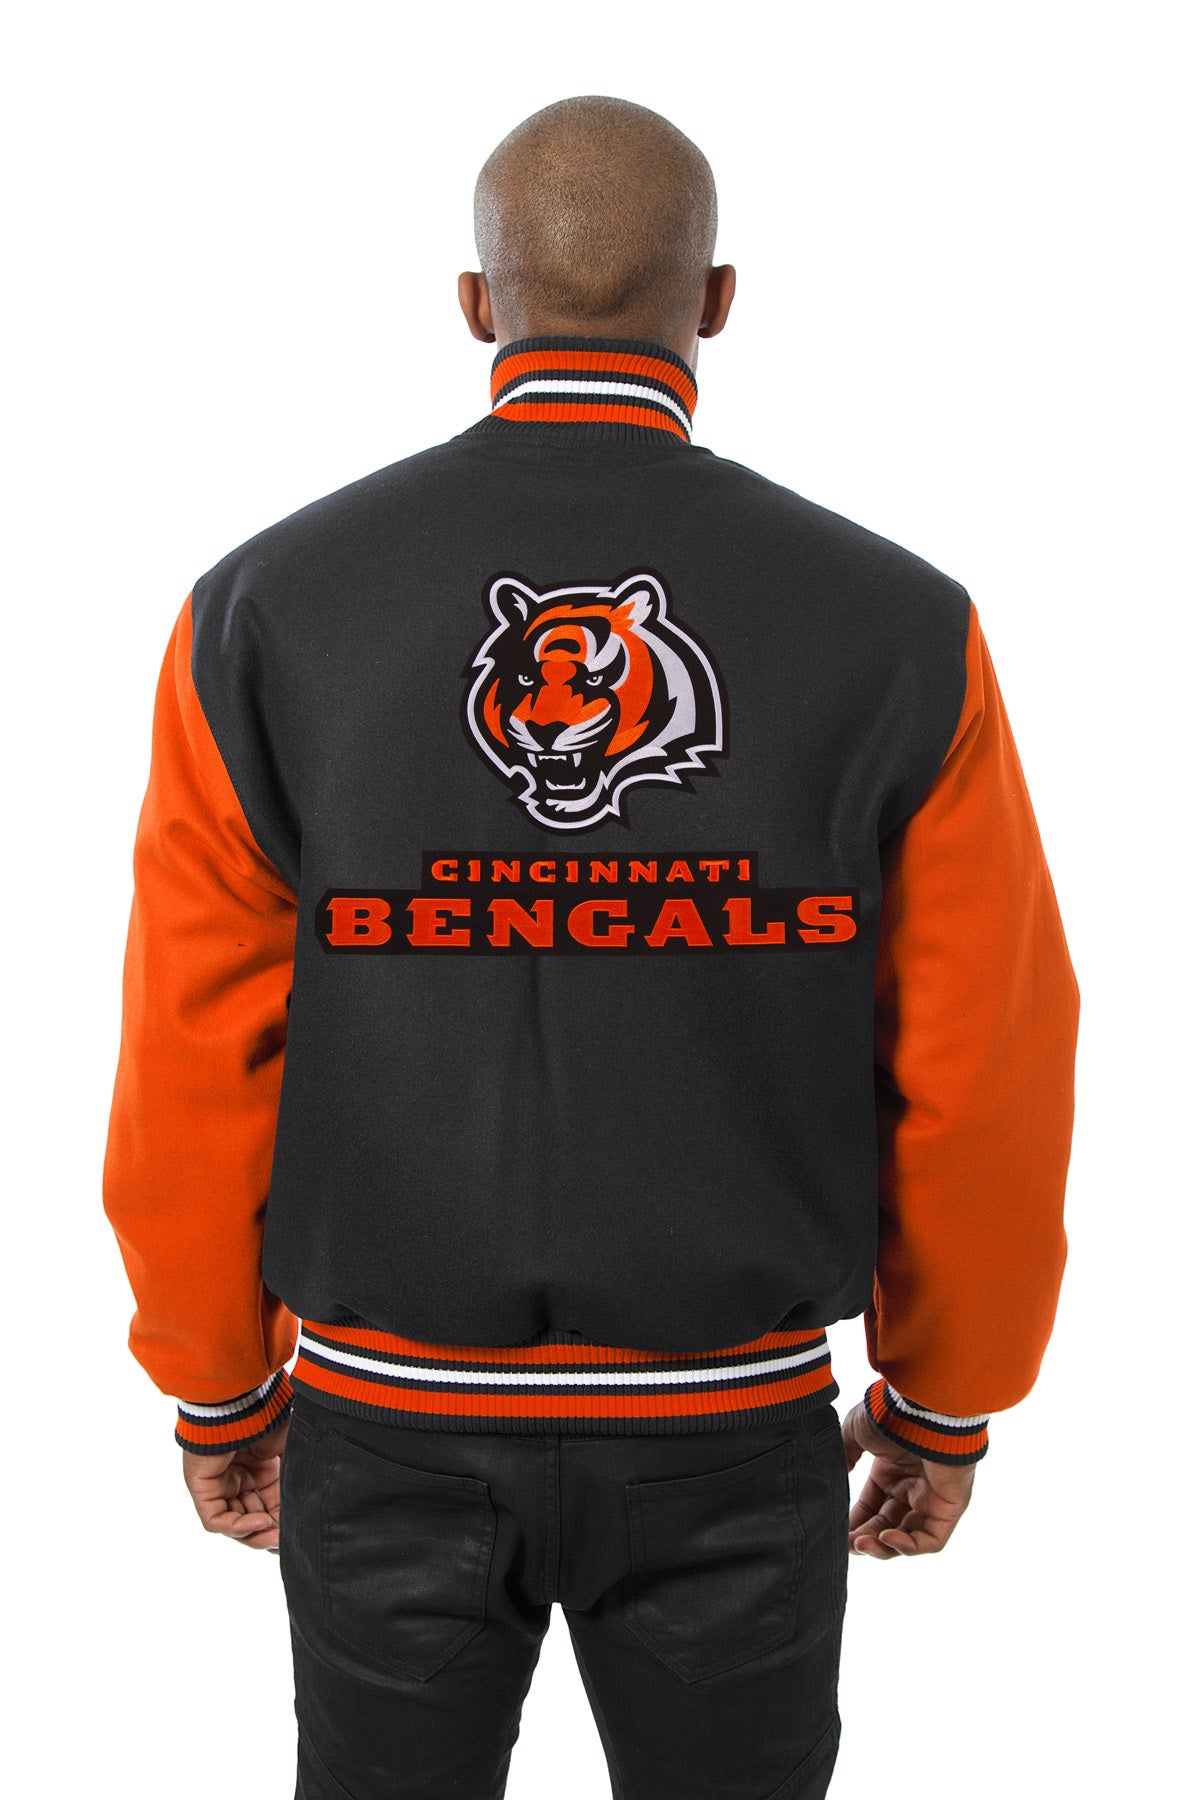 Cincinnati Bengals Embroidered Wool Jacket